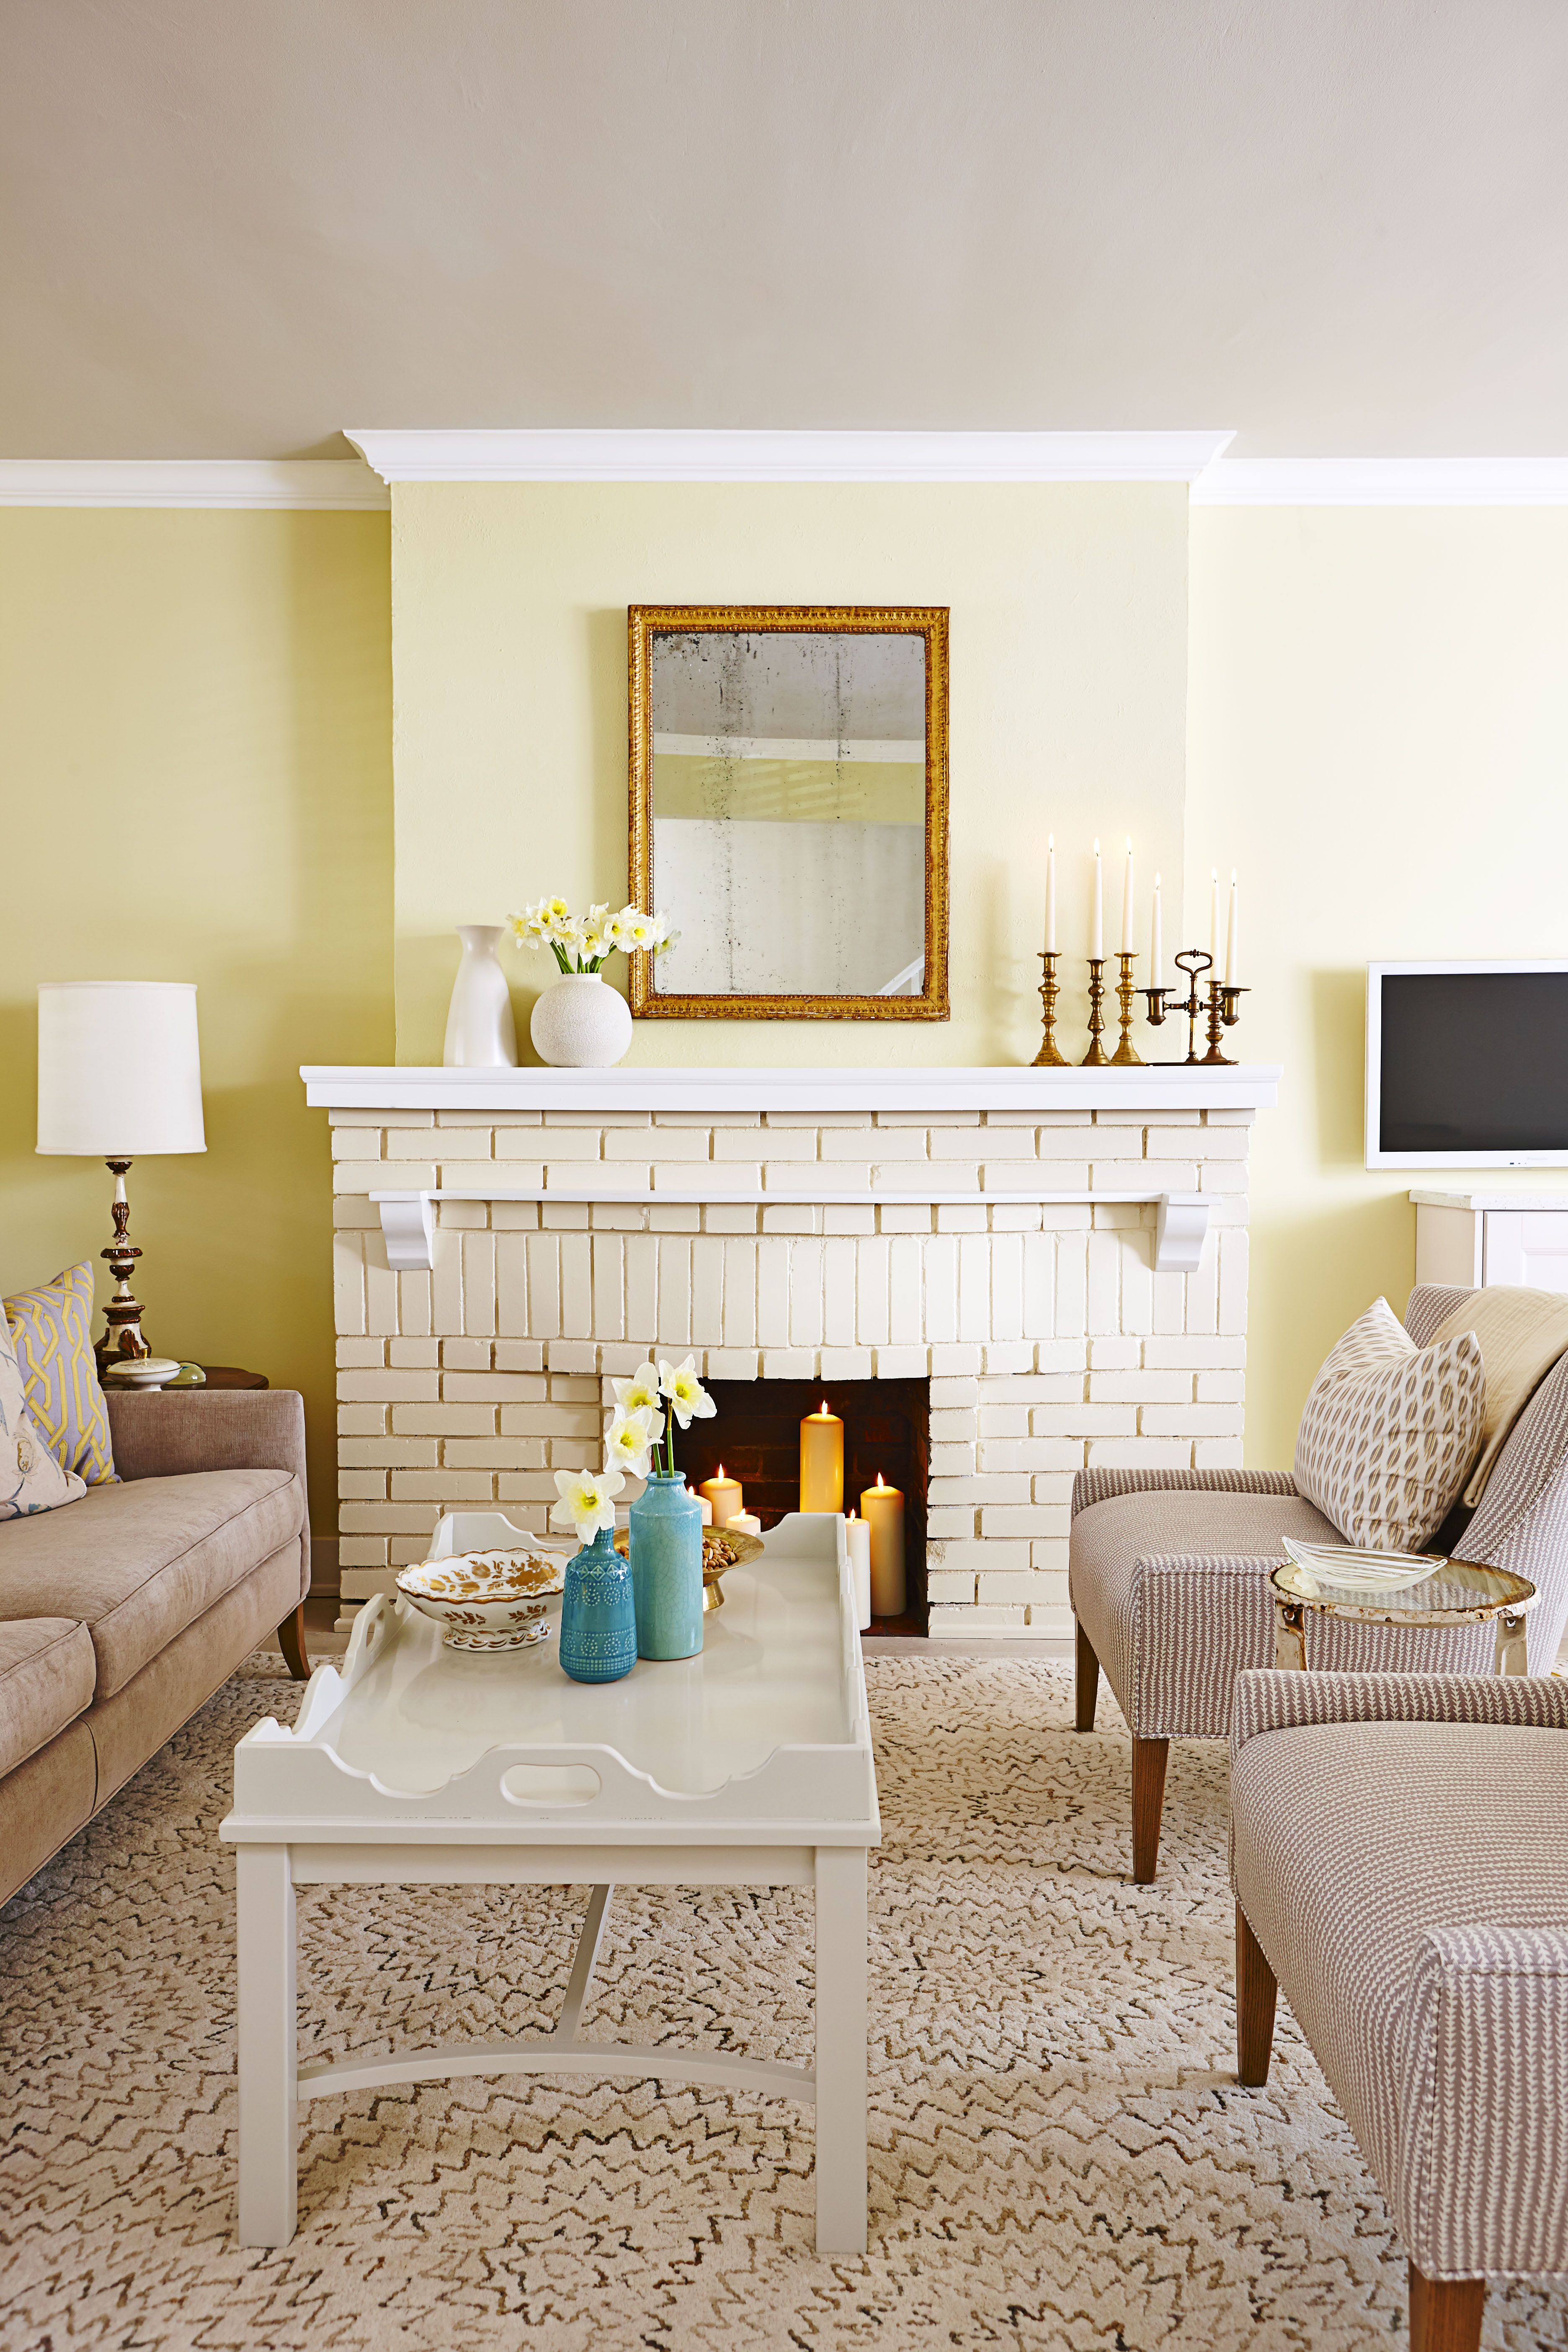 18 Fireplace Decorating Ideas - Best Fireplace Design Inspiration